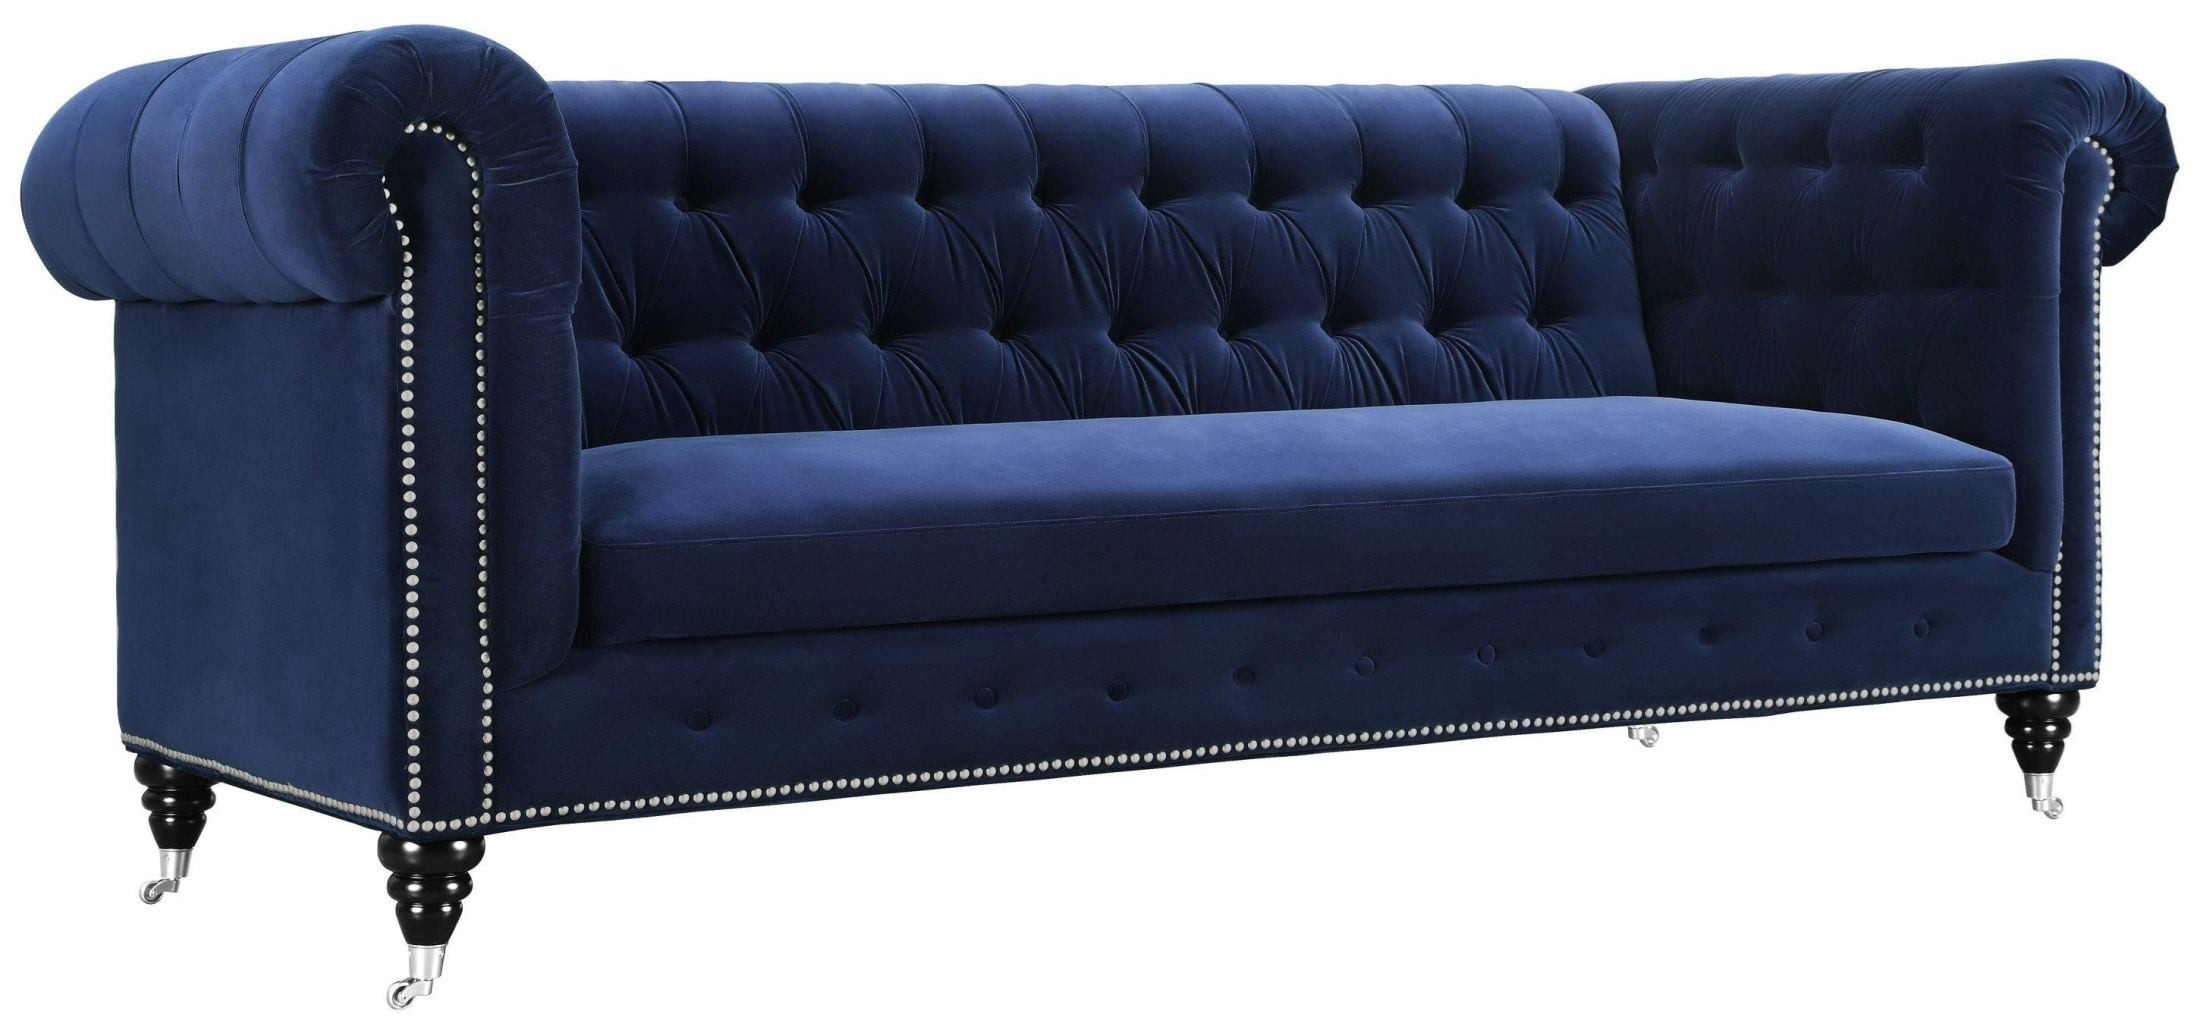 Best ideas about Navy Velvet Sofa
. Save or Pin Hanny Navy Blue Velvet Sofa S99 TOV Furniture Now.